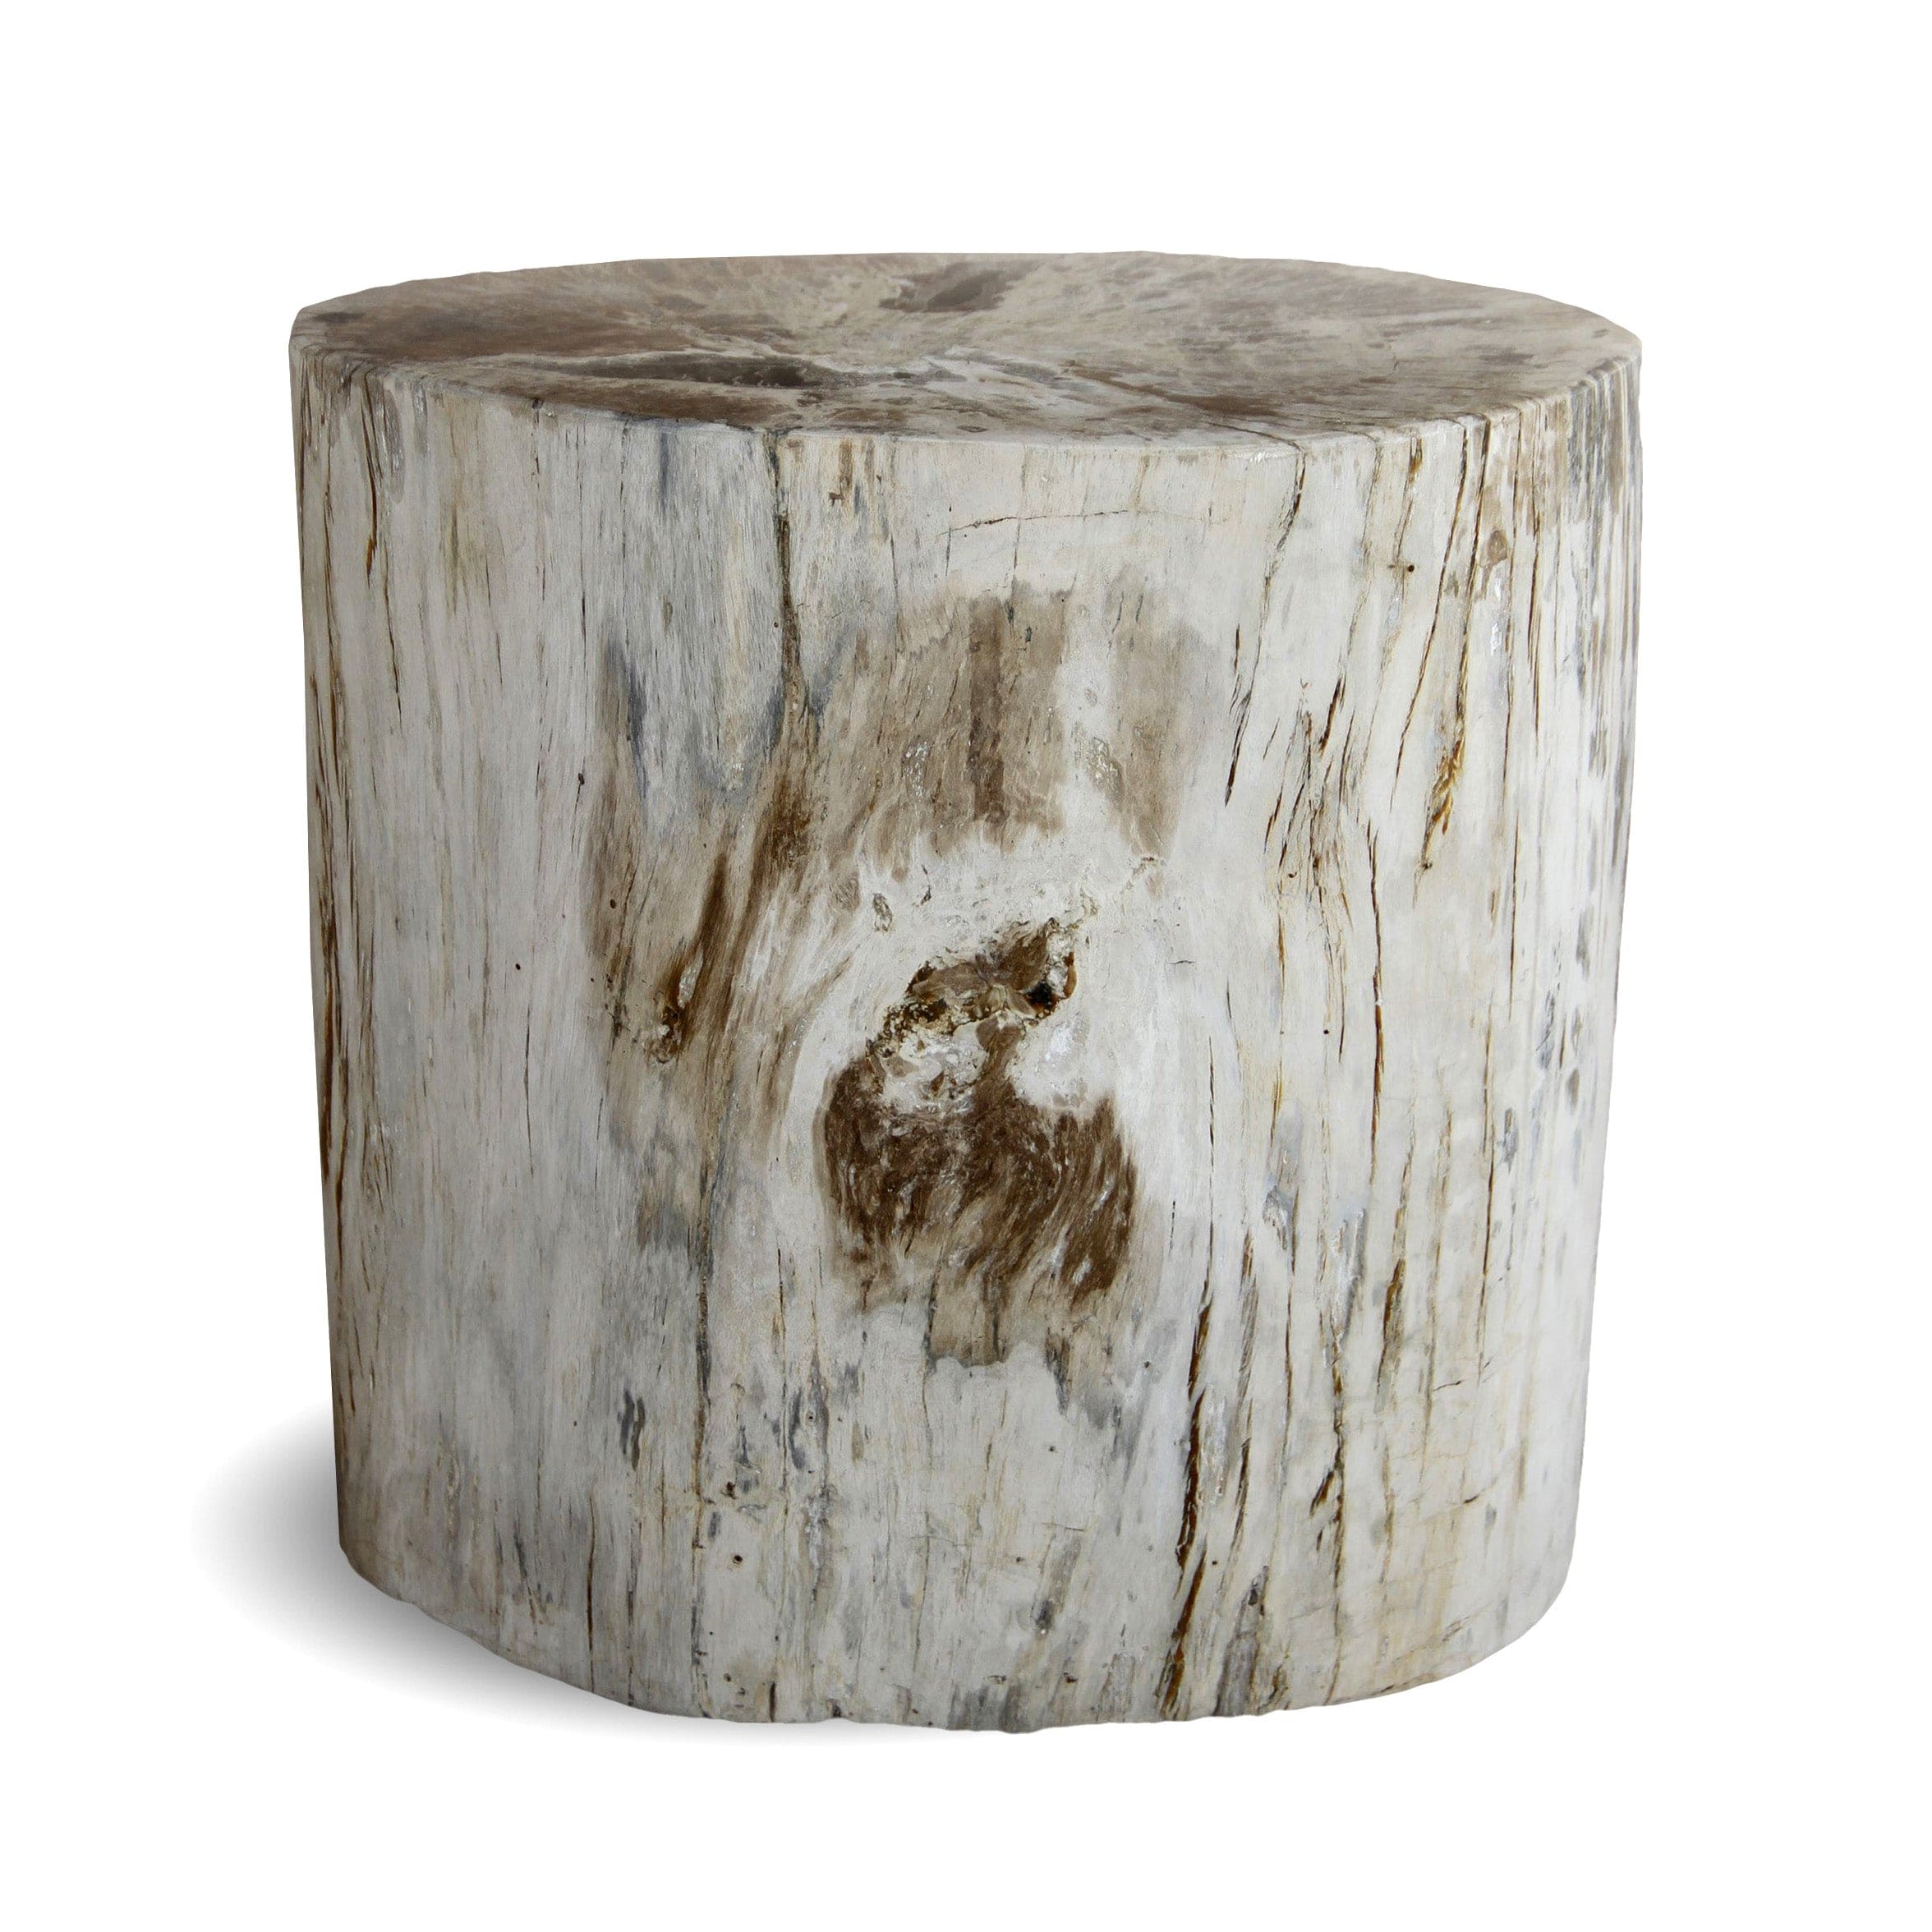 Kalifano Petrified Wood Petrified Wood Round Stump / Stool from Indonesia - 16" / 181 lbs PWS3300.003